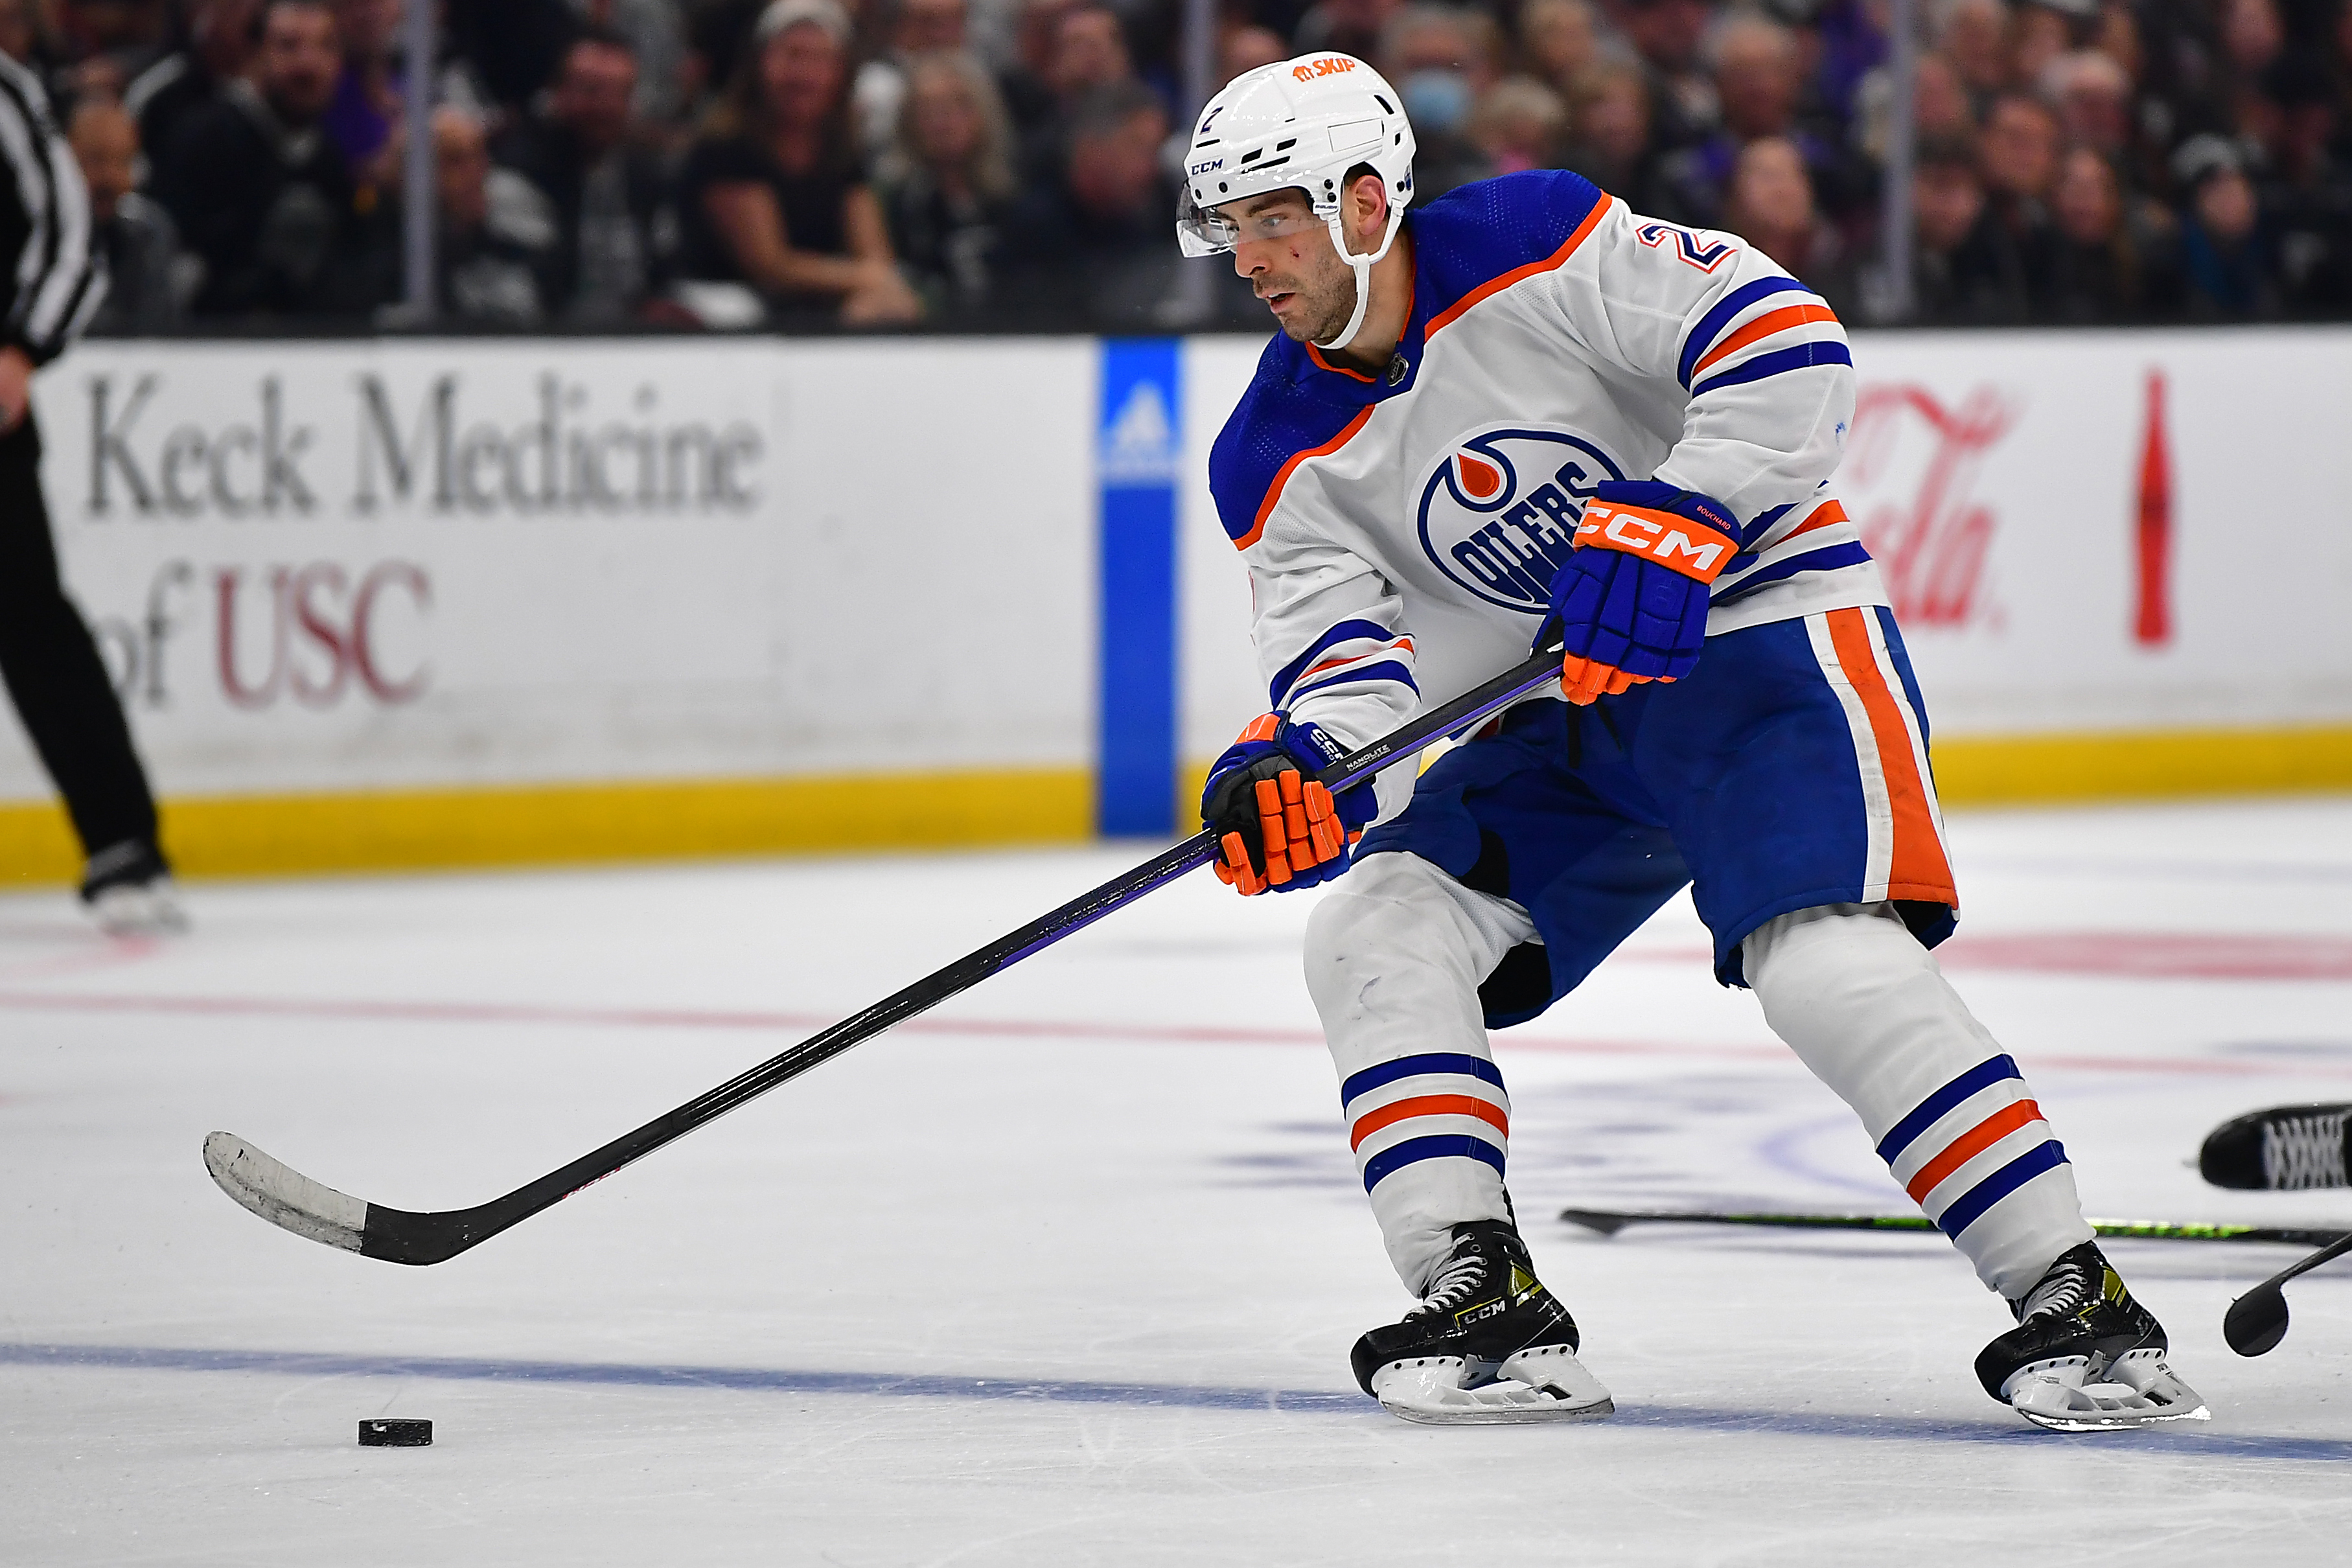 Important update on Evan Bouchard contract talks - HockeyFeed